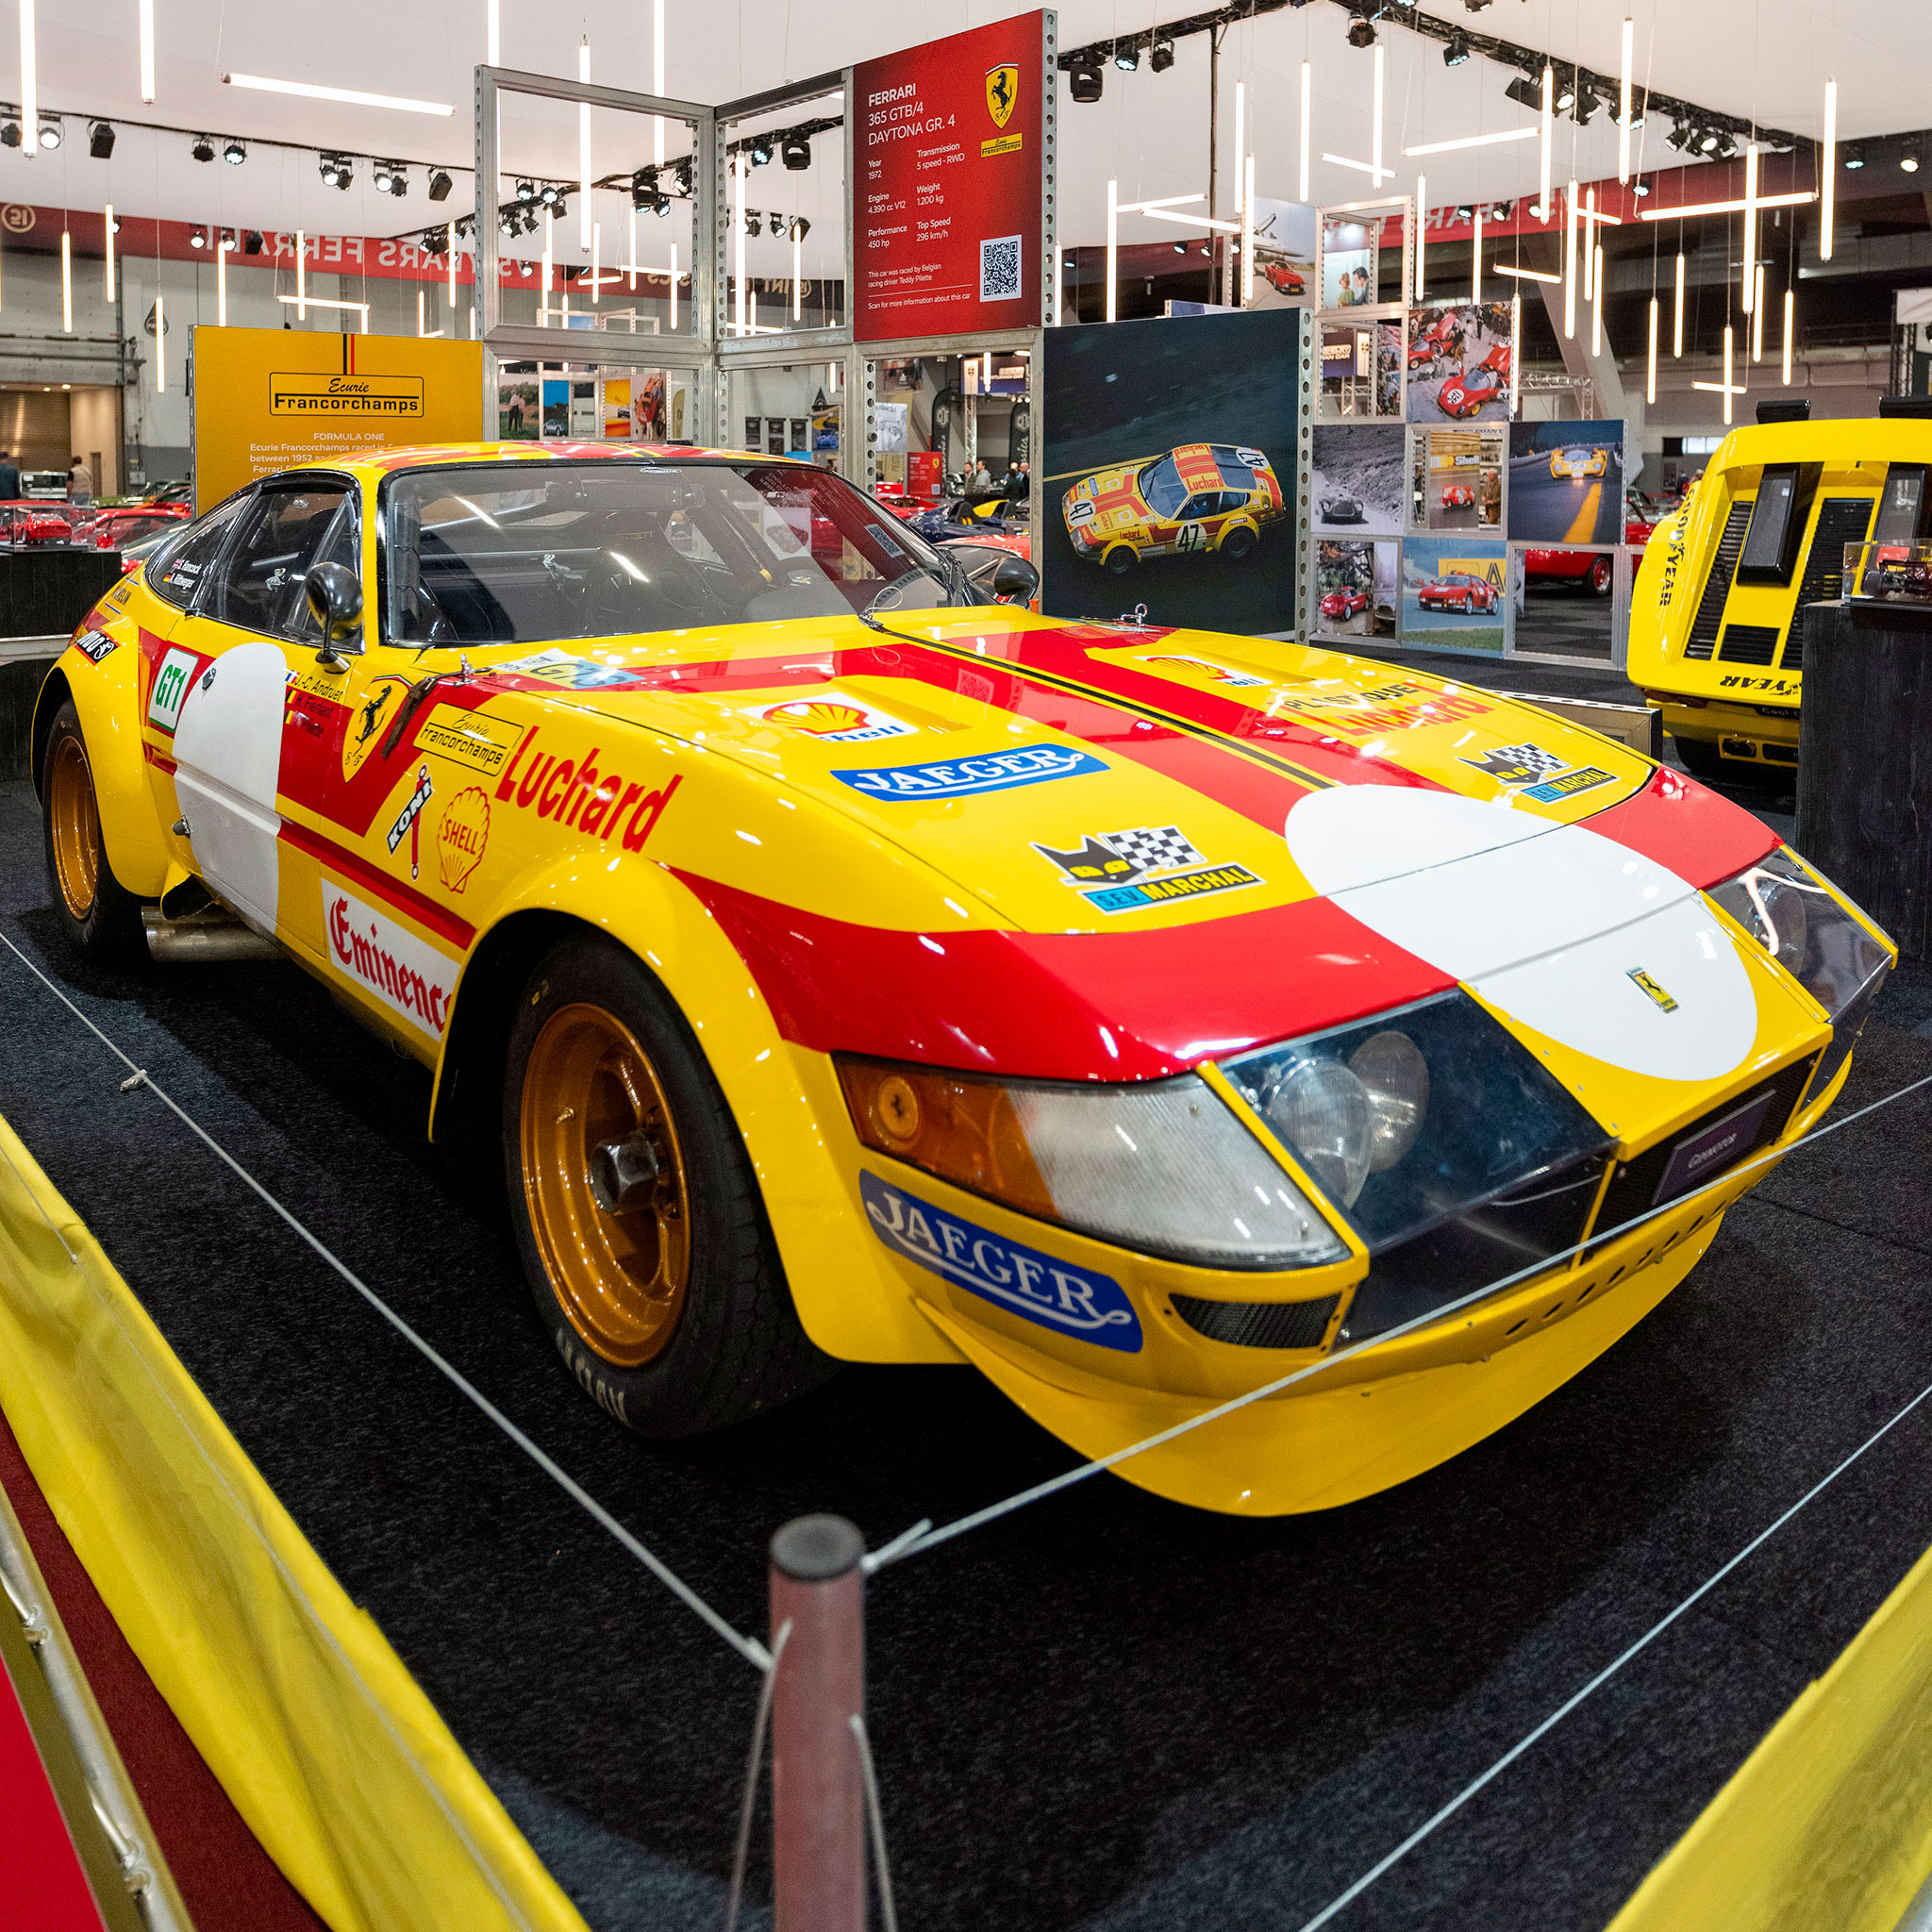 1972 Ferrari 365 GTB:4 Daytona Gr. 4 – Écurie Francorchamps – 75 ans Ferrari.